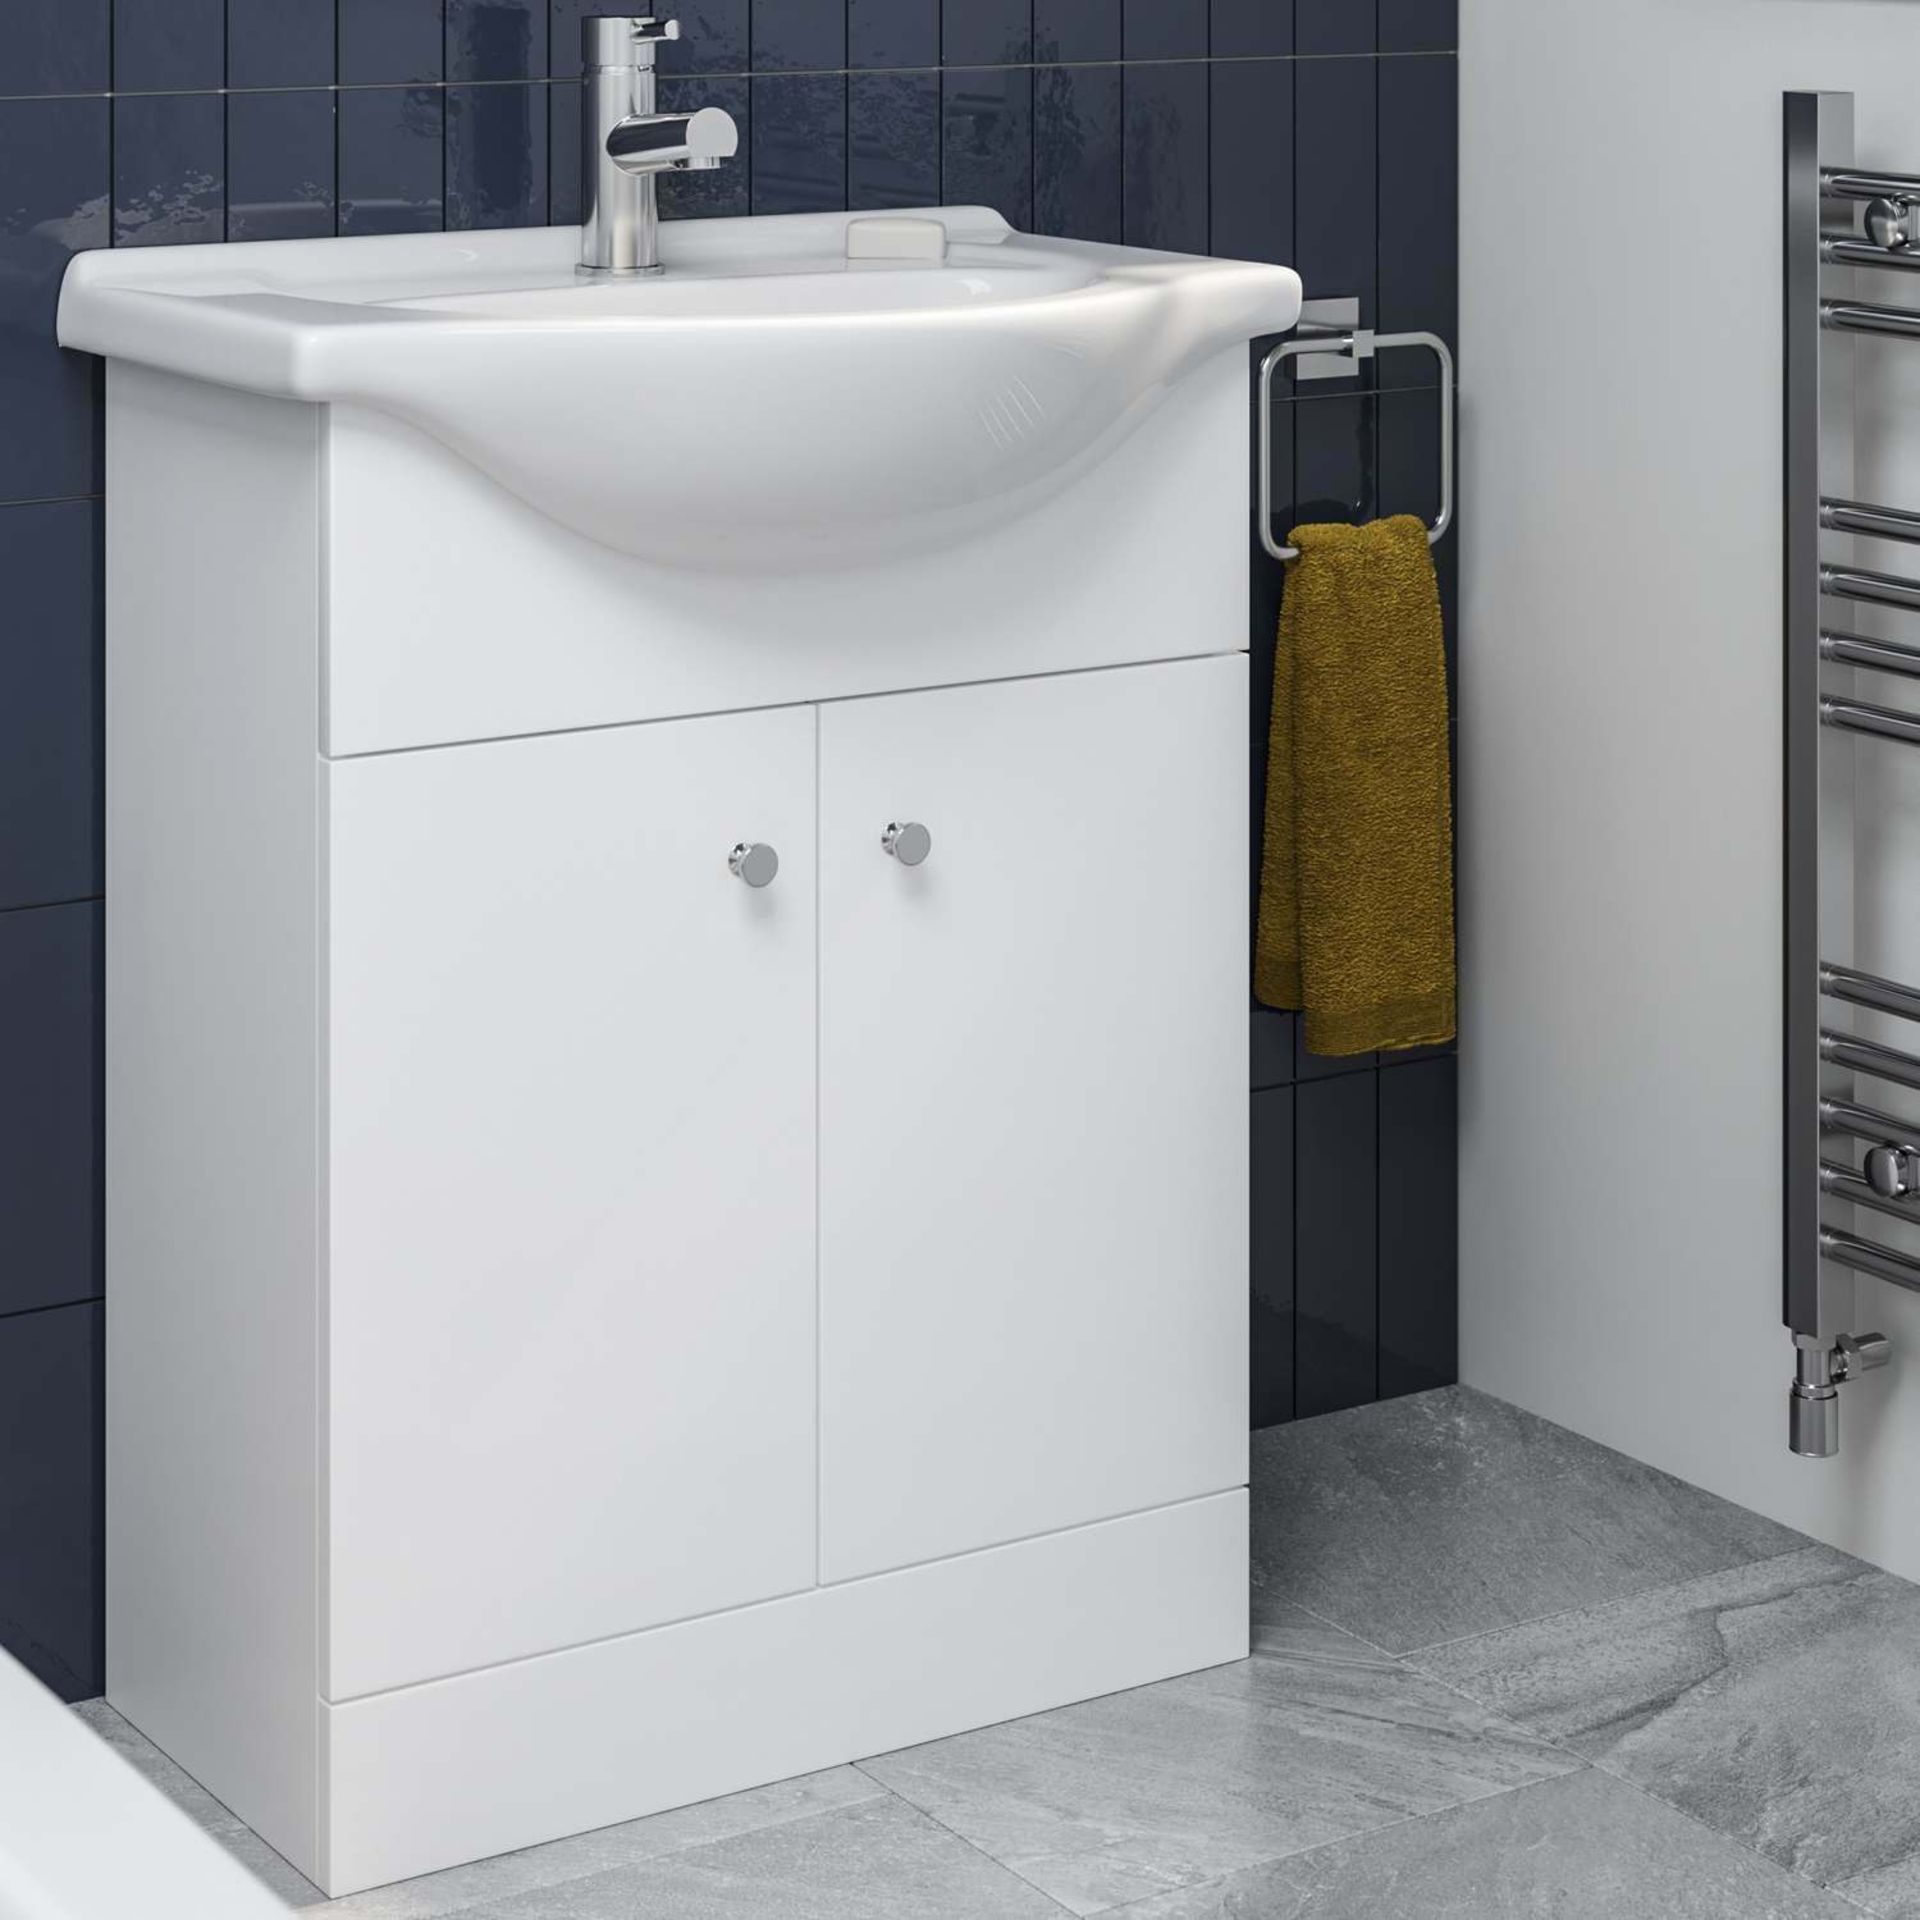 BRAND NEW BOXED 650mm Quartz White Basin Vanity Unit- Floor Standing. RRP £399.99.